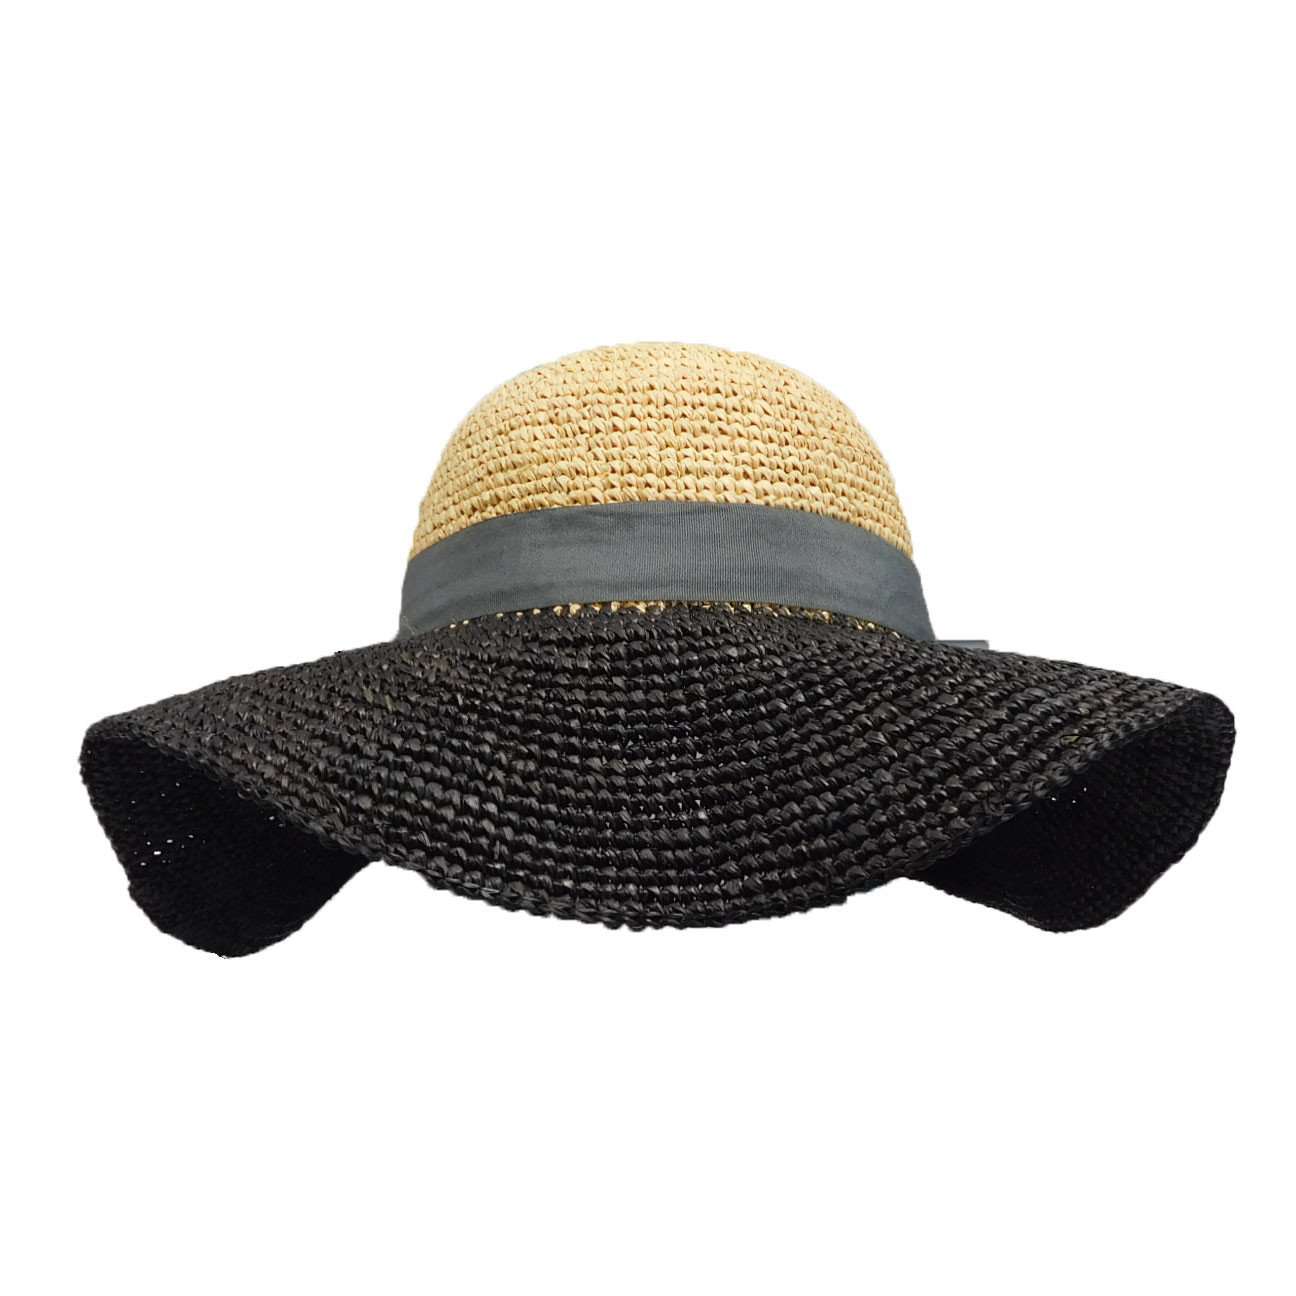 Black and Natural Two Tone Crocheted Raffia Sun Hat - Boardwalk Style Wide Brim Sun Hat Boardwalk Style Hats da664BK Natural / Black Medium (57 cm) 